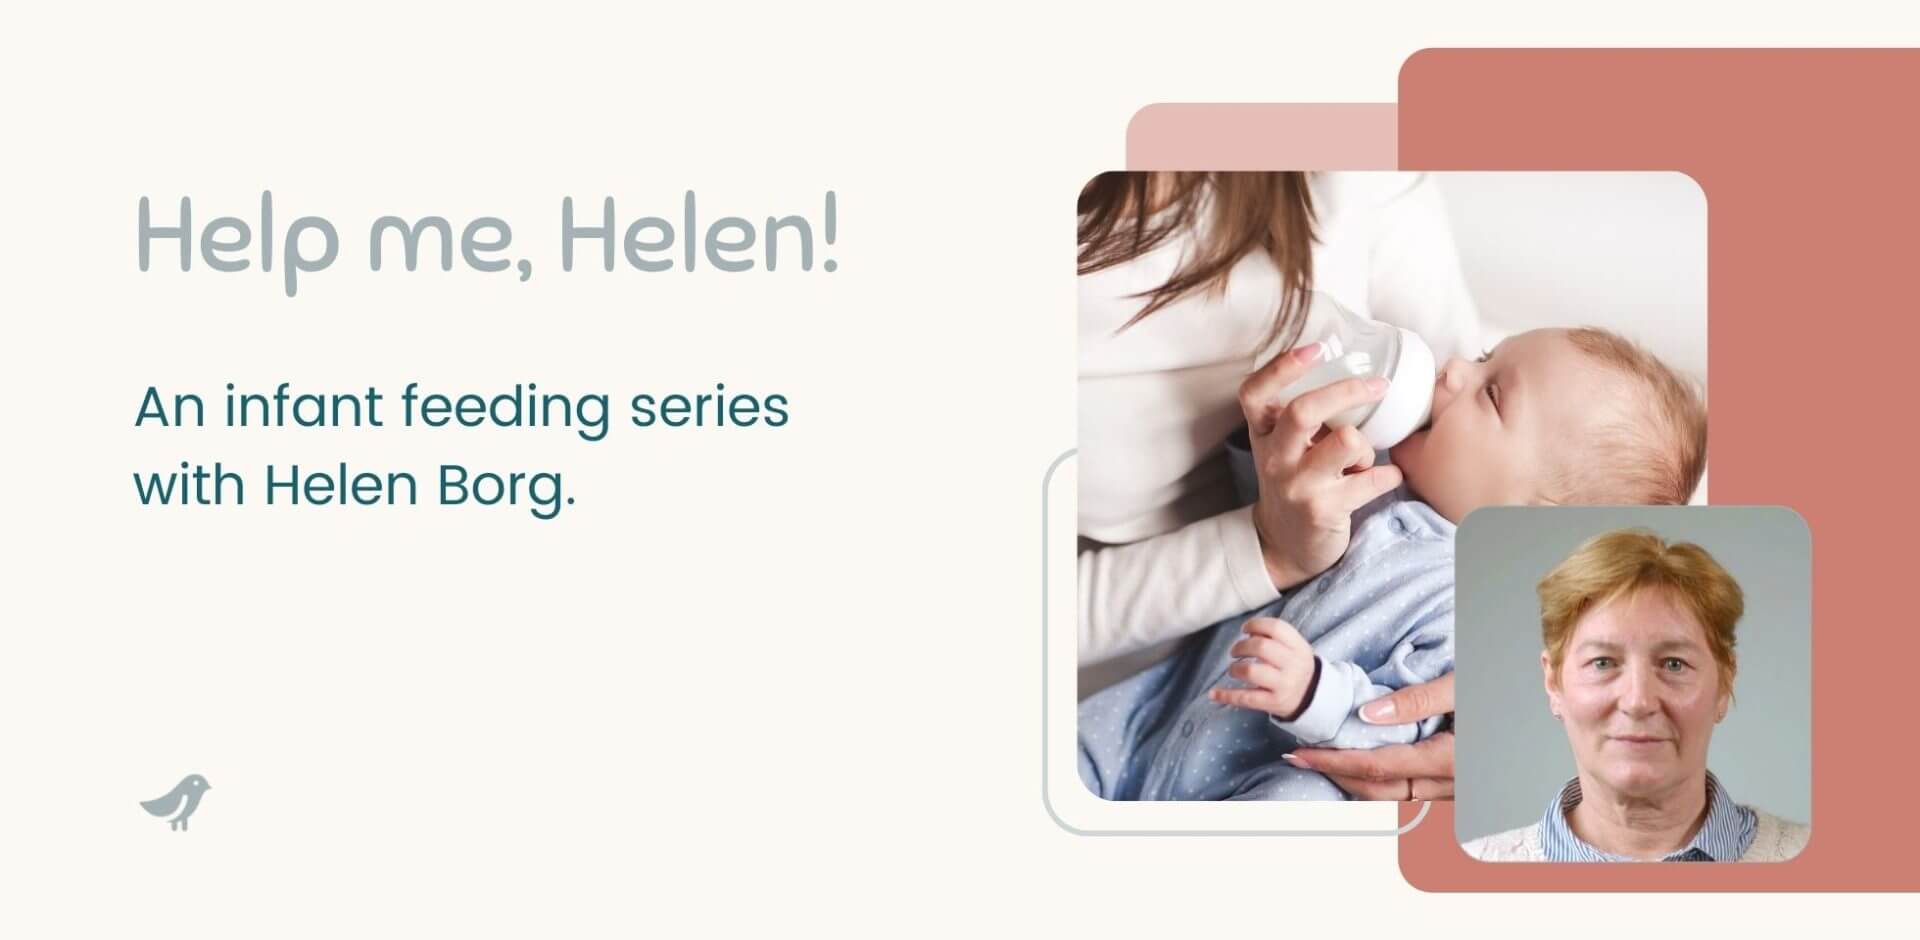 Help me, Helen! An infant feeding series with Helen Borg.